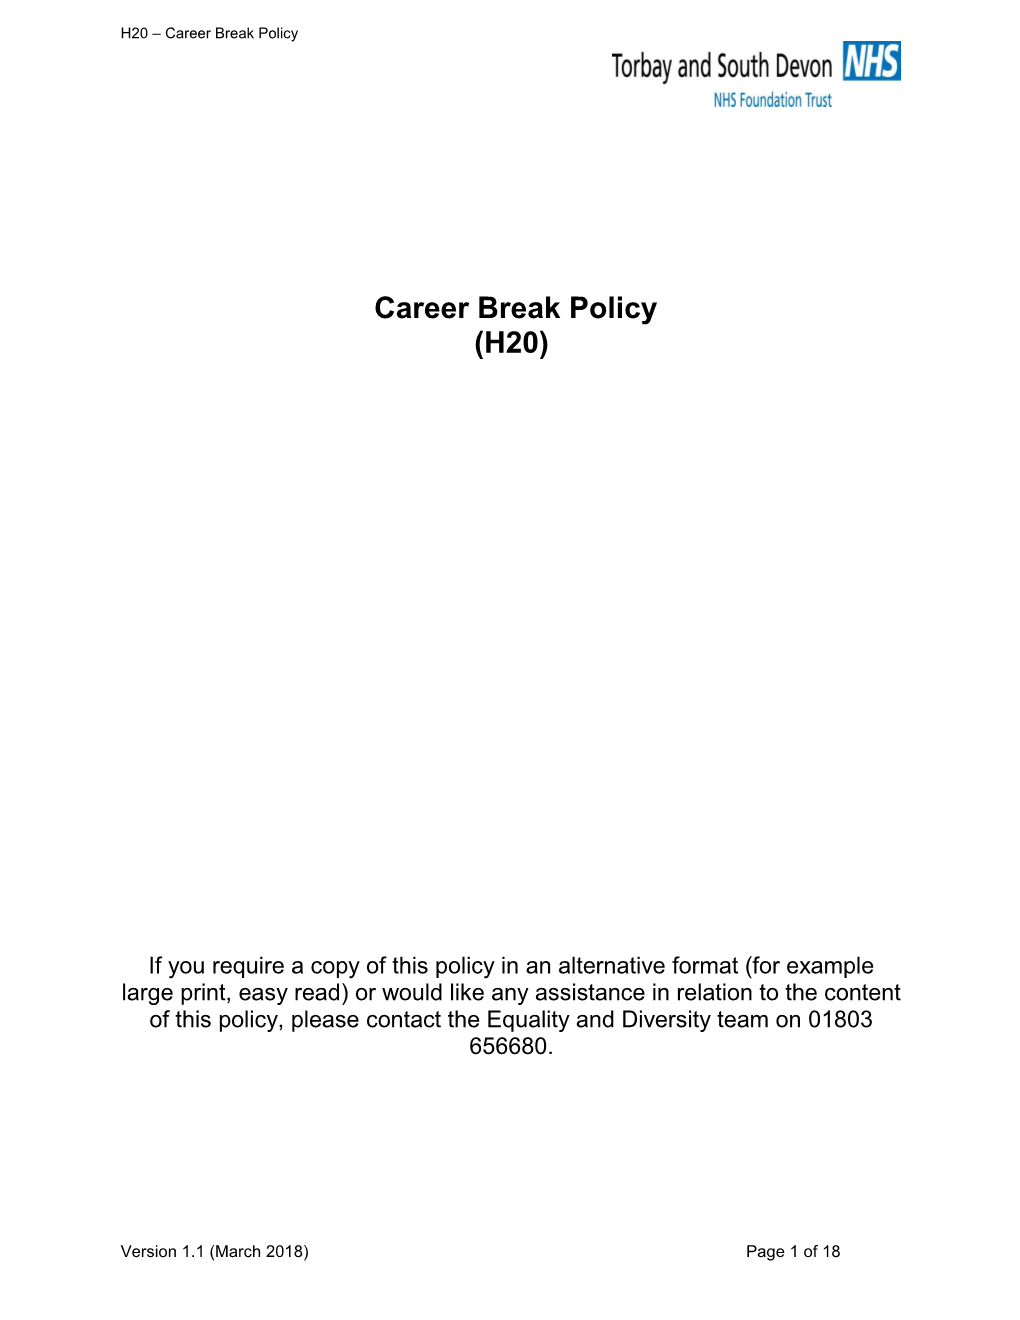 Career Break Policy (H20)